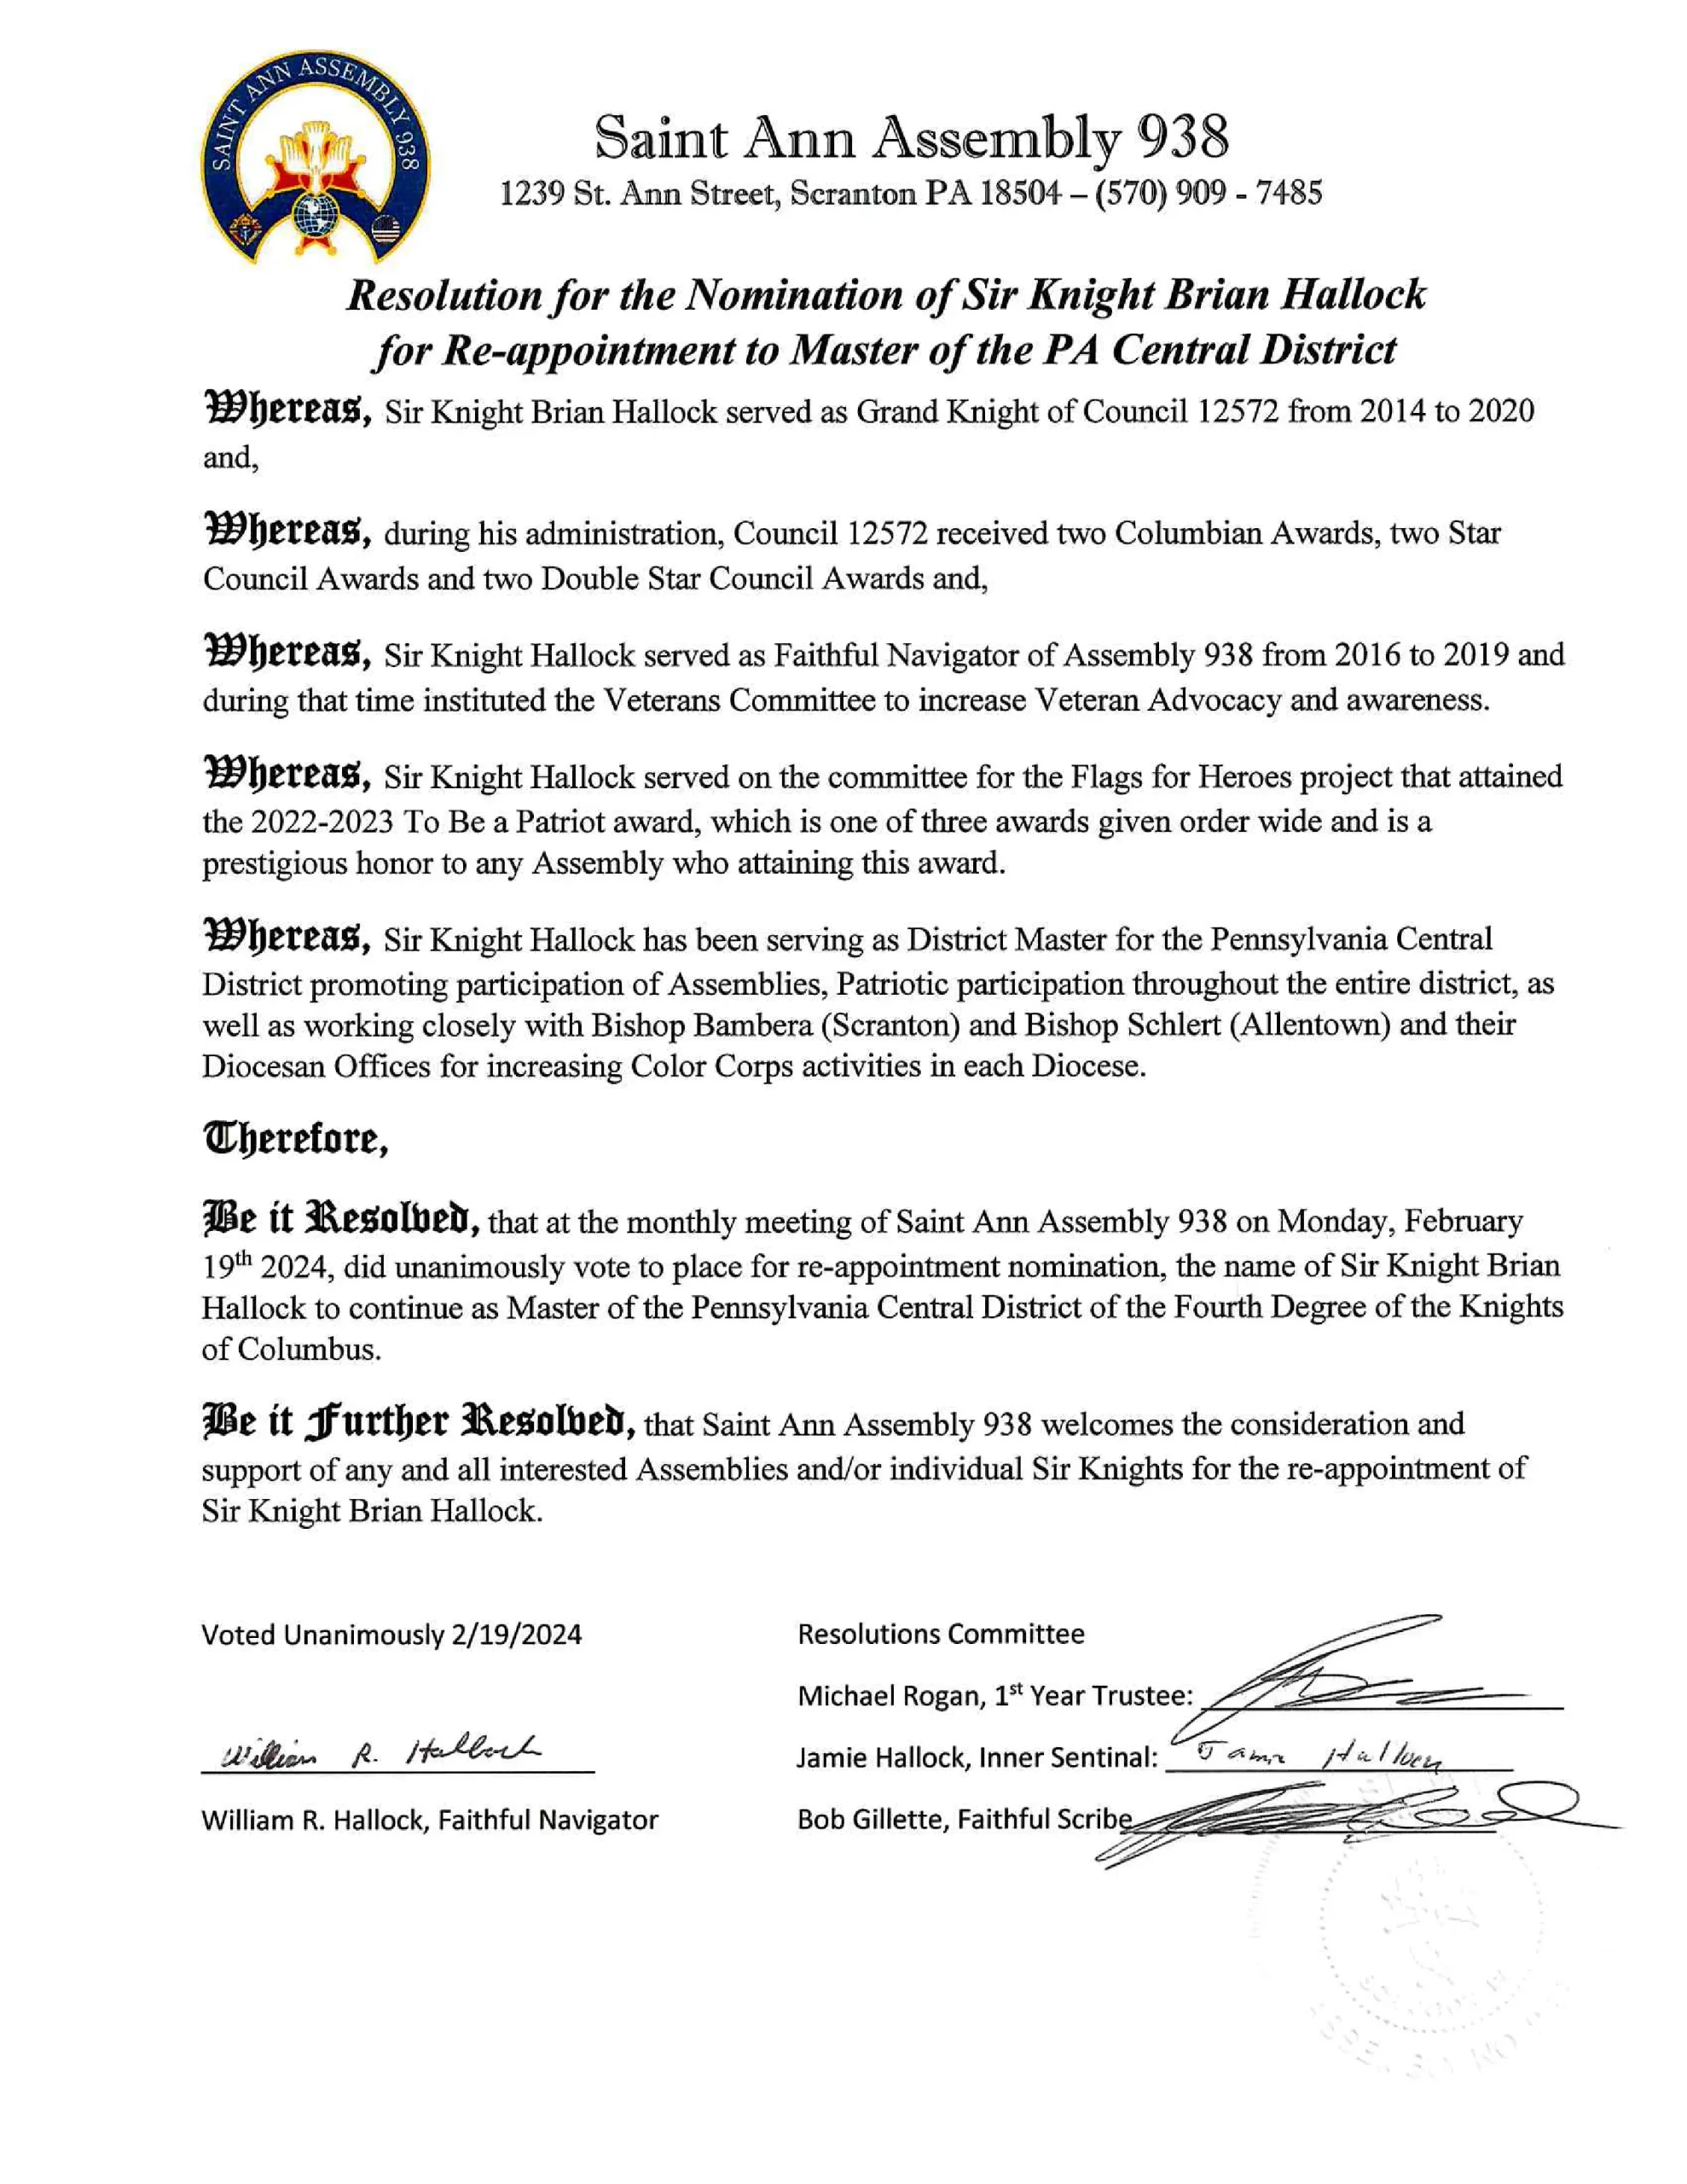 Knights of Columbus KofC Resolutions 2024 Biennial Meeting